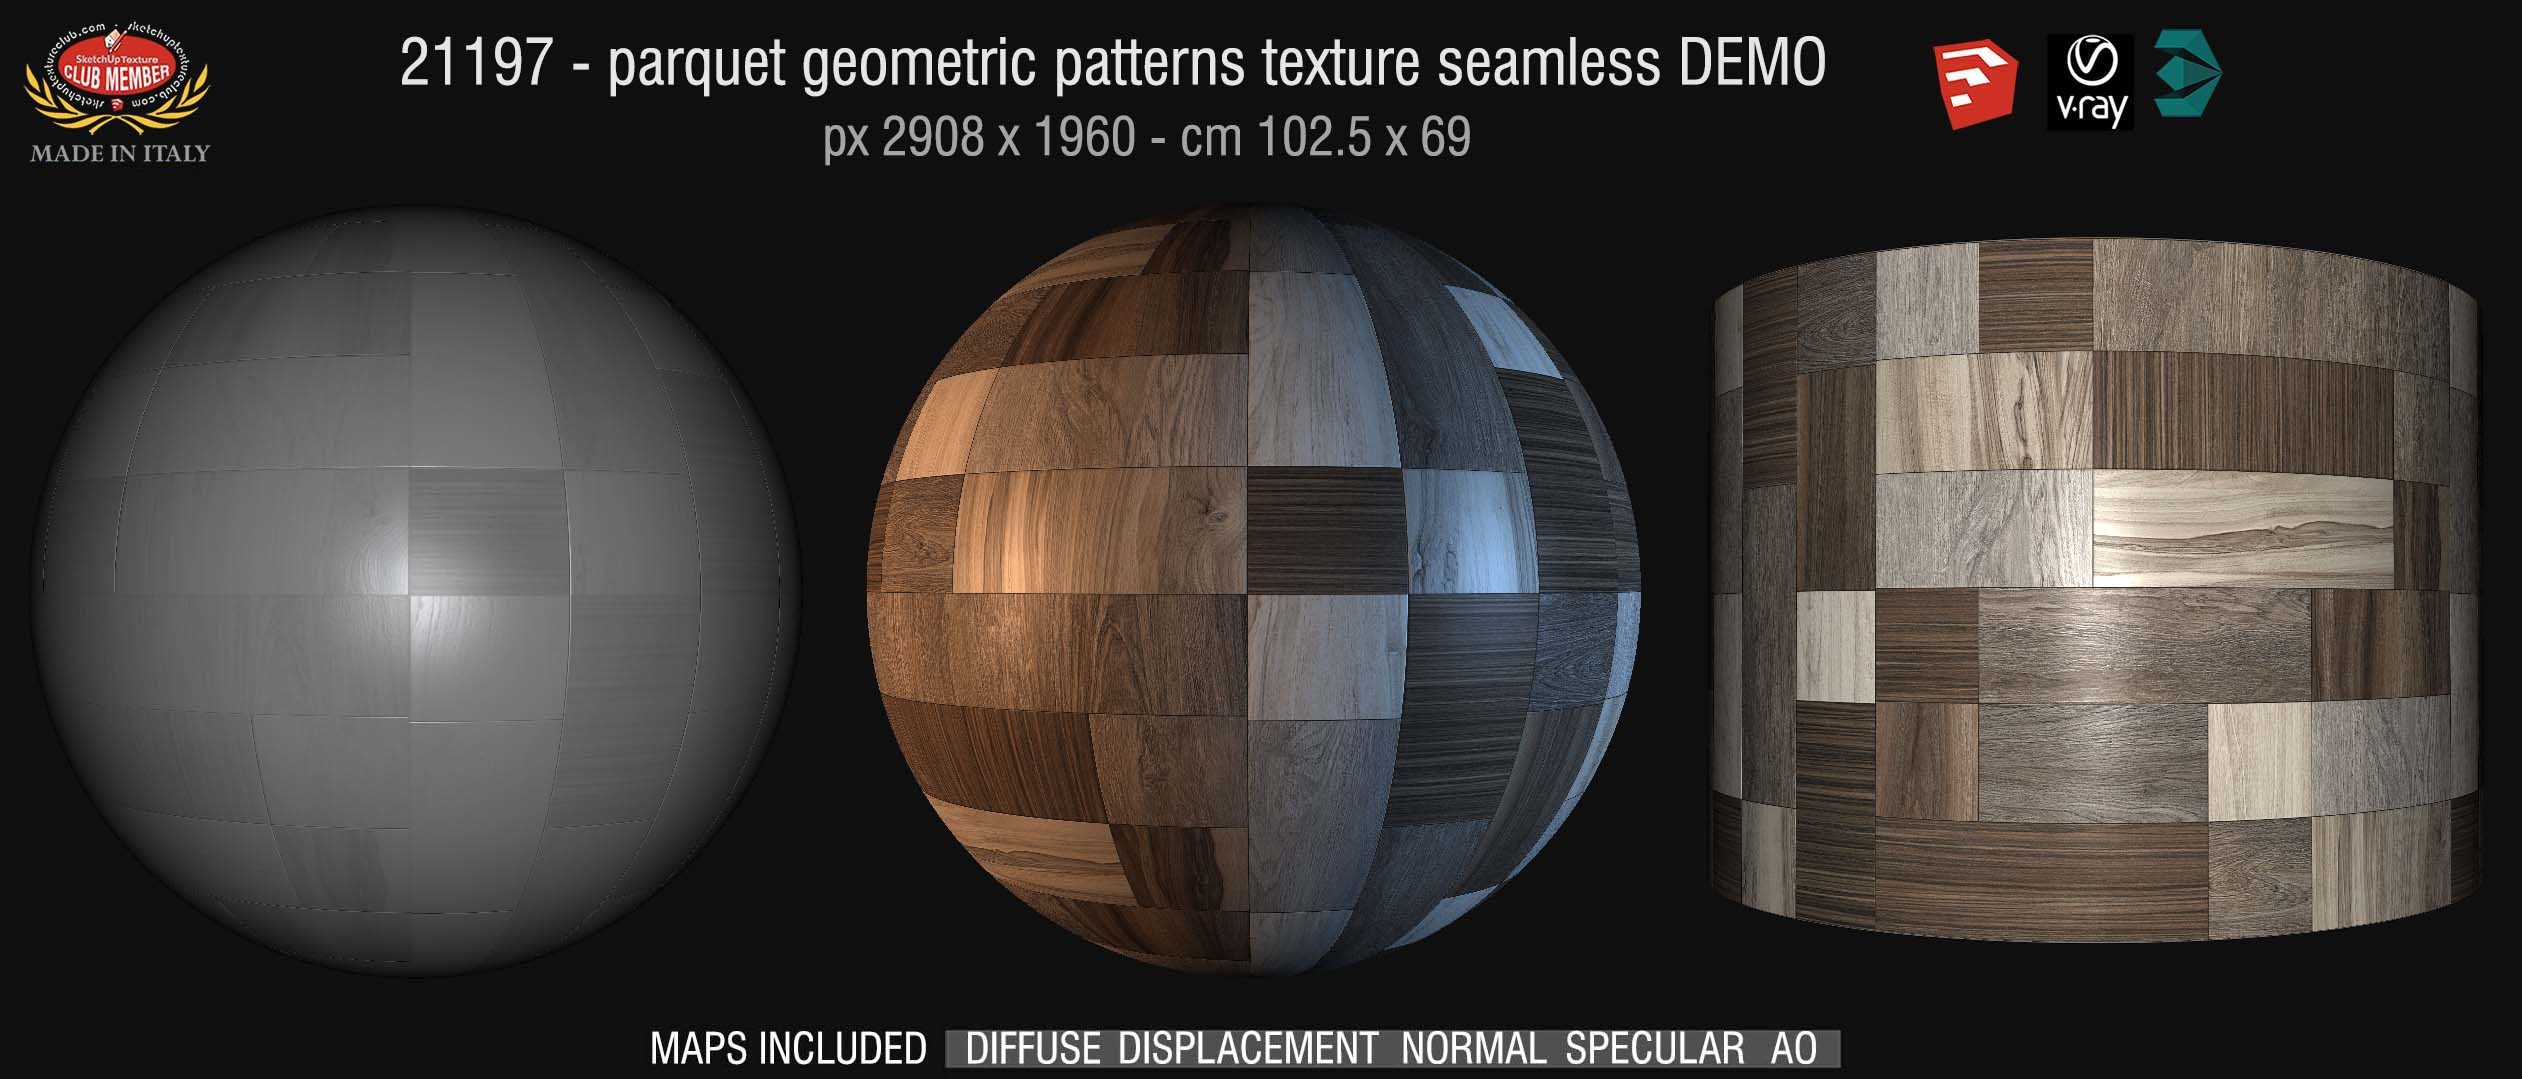 21197 Parquet geometric patterns texture + maps DEMO